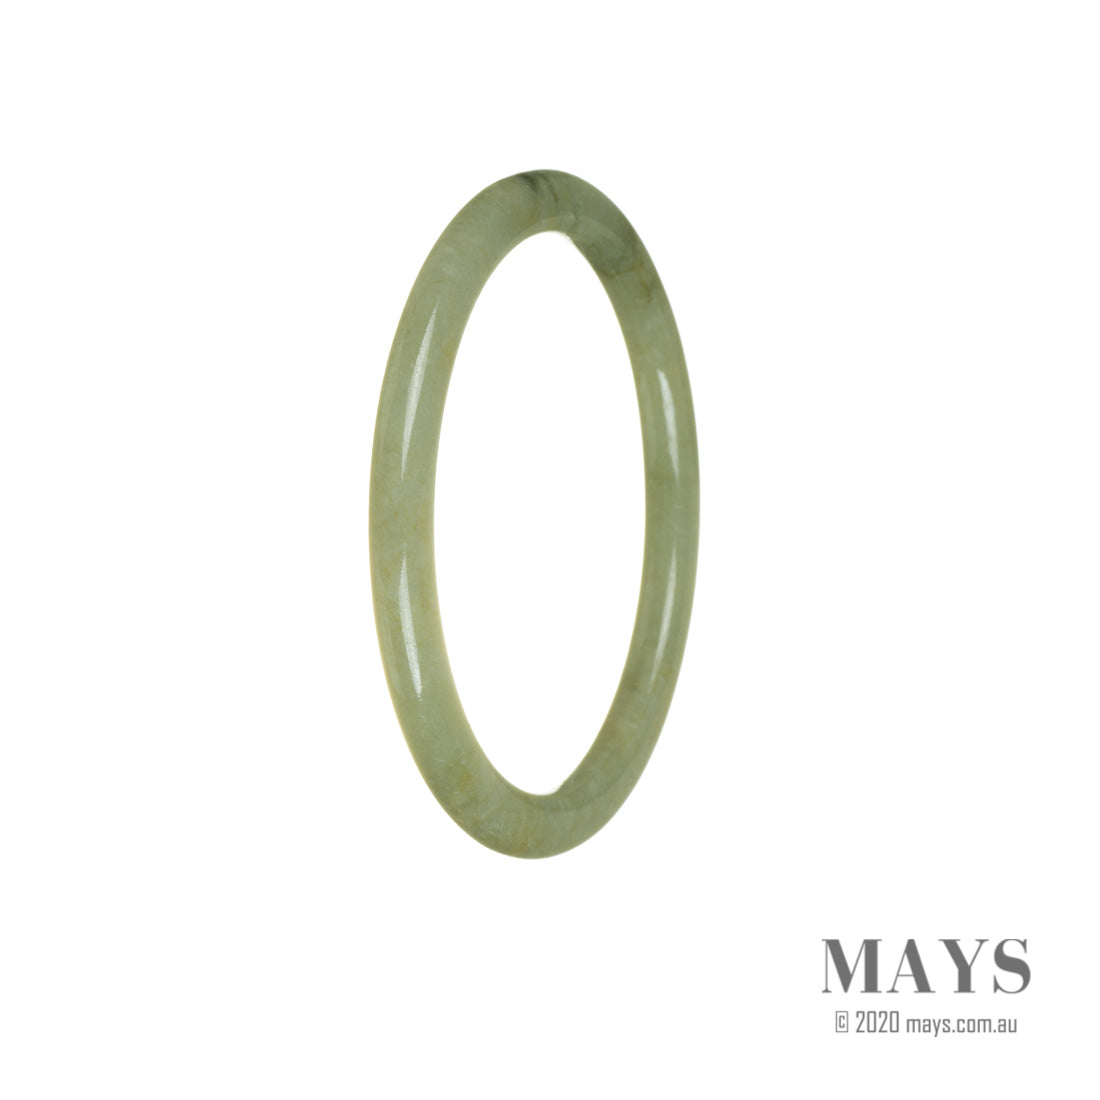 A thin, 58mm genuine Type A yellowish green jadeite jade bangle from MAYS GEMS.